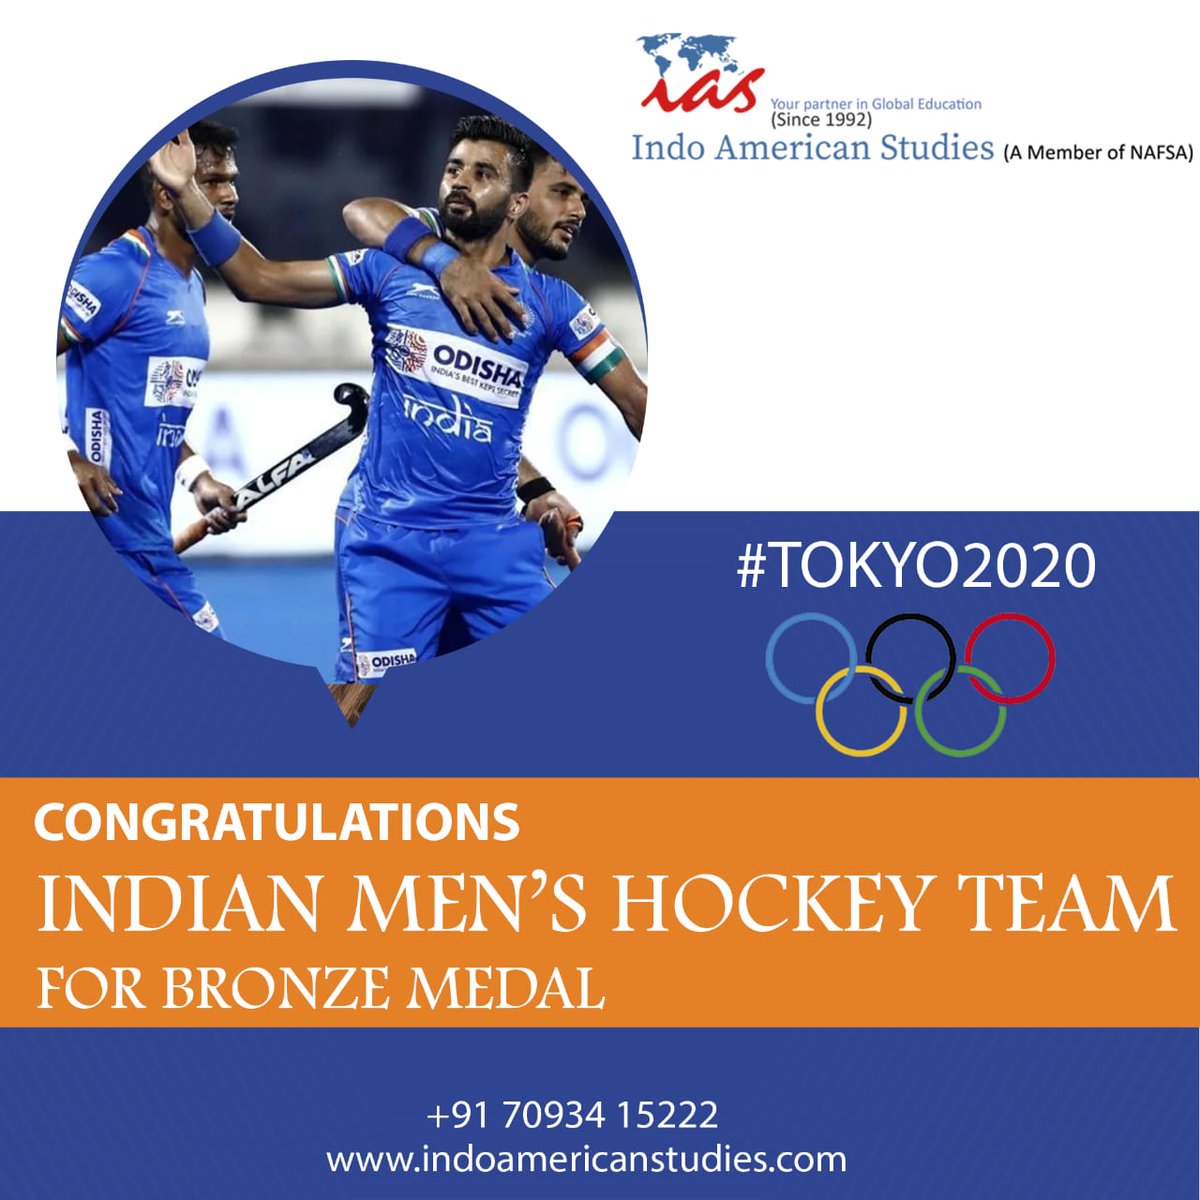 The men's hockey team won India's first Olympic hockey medal in over four decades.
Congratulations to Men's Hockey Team
#indoamericanstudies #studyuk #studyus #overseasstuides #unversities #menshockey #olympic #tokyogames #tokyoolympics #bronze #winners #winning